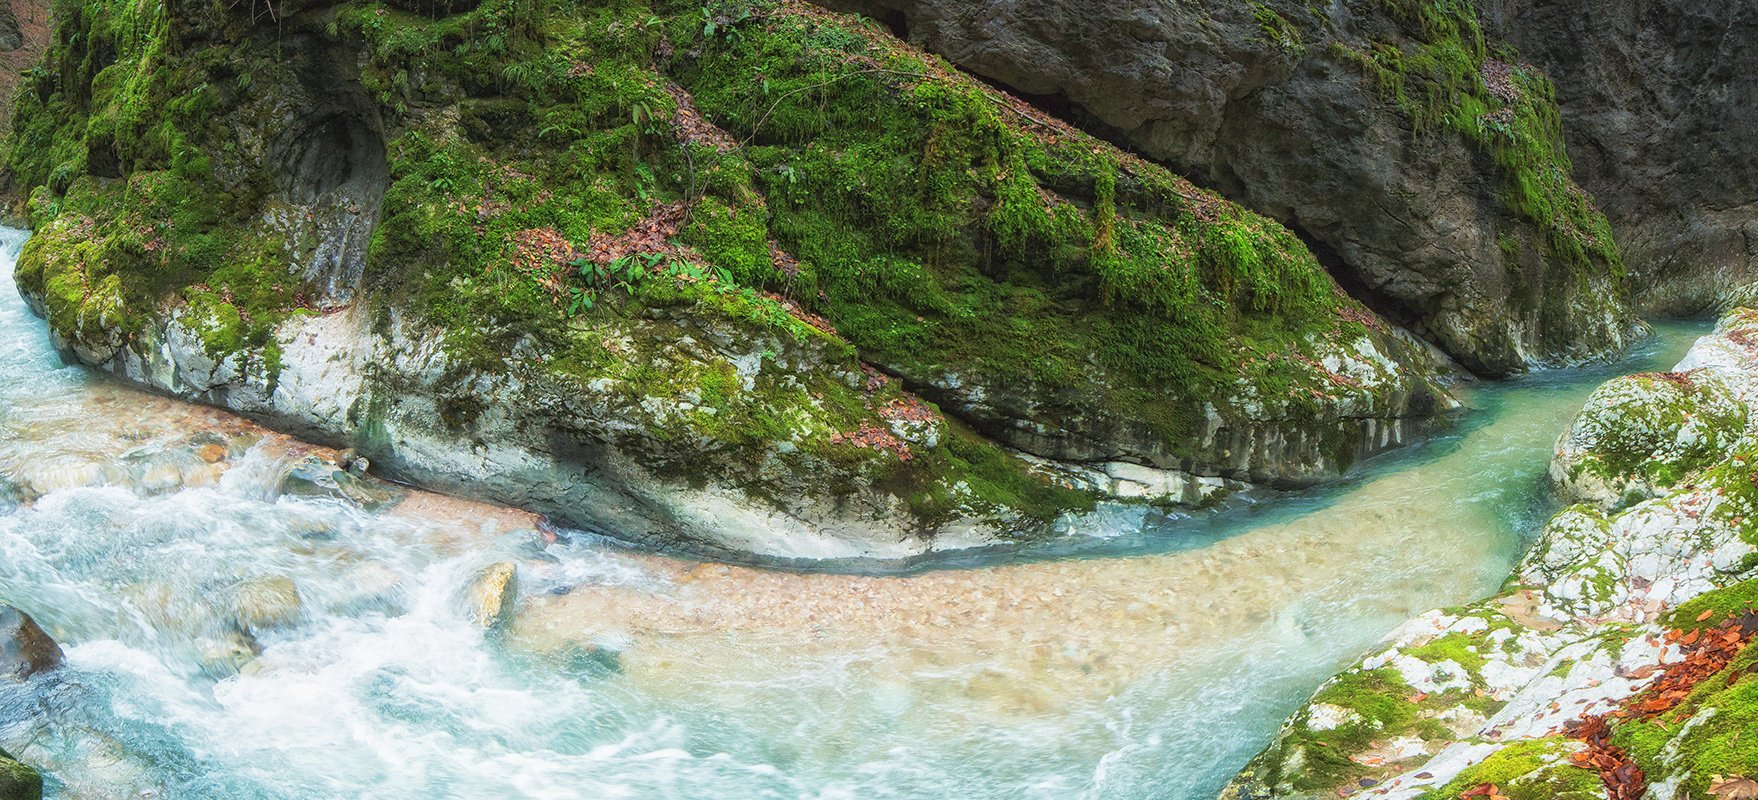 Jgheabului Gorges ‐ Wild gorges in Apuseni